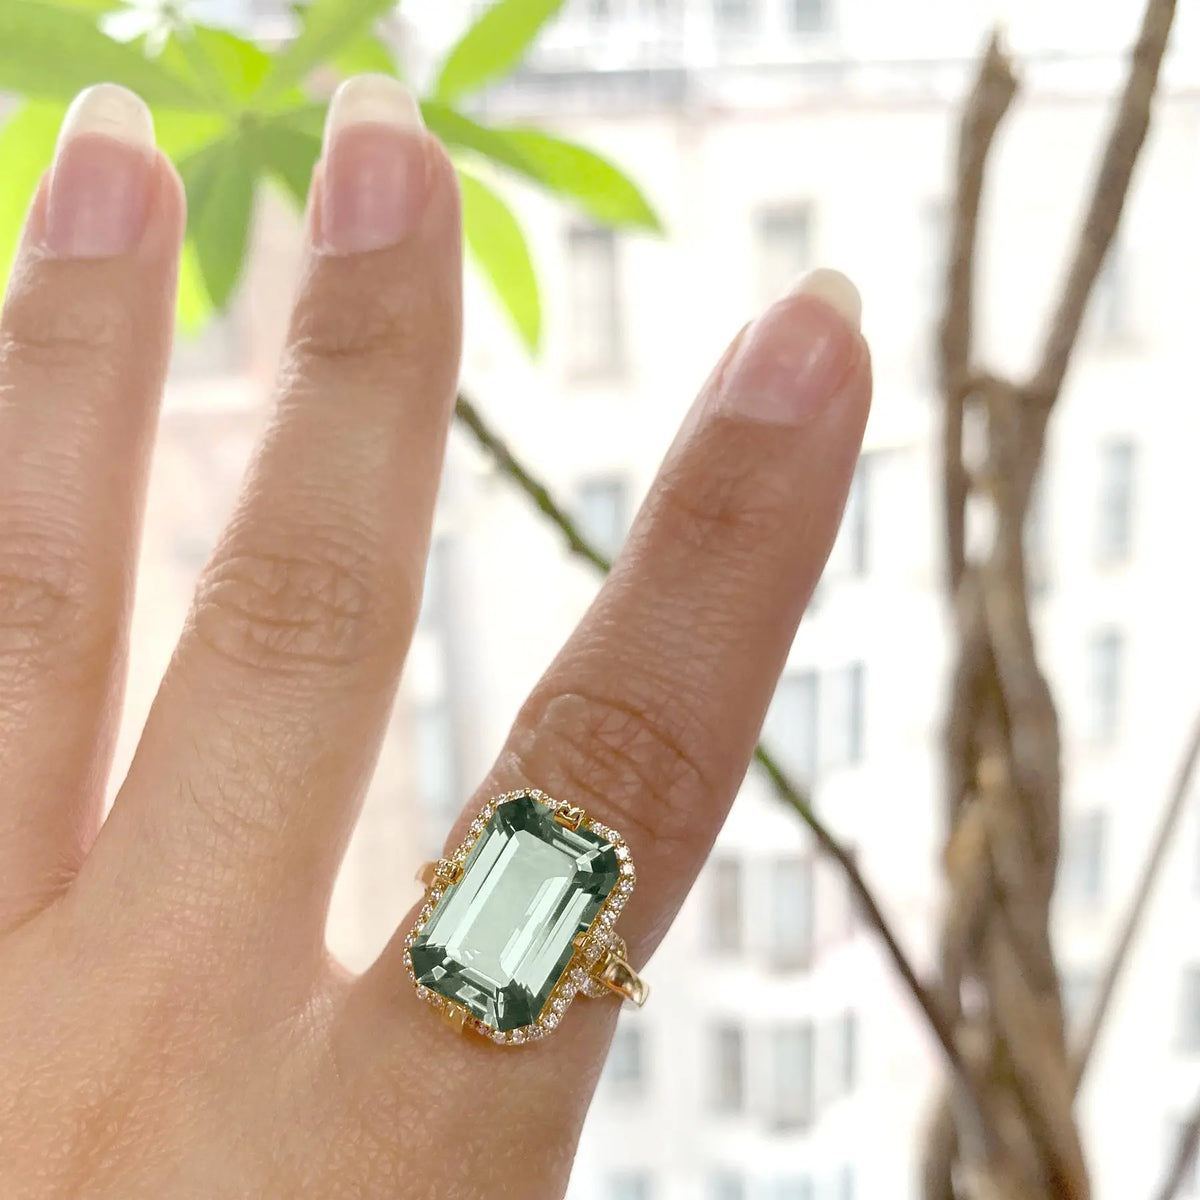 Prasiolite Emerald Cut Ring with Diamonds - Squash Blossom Vail